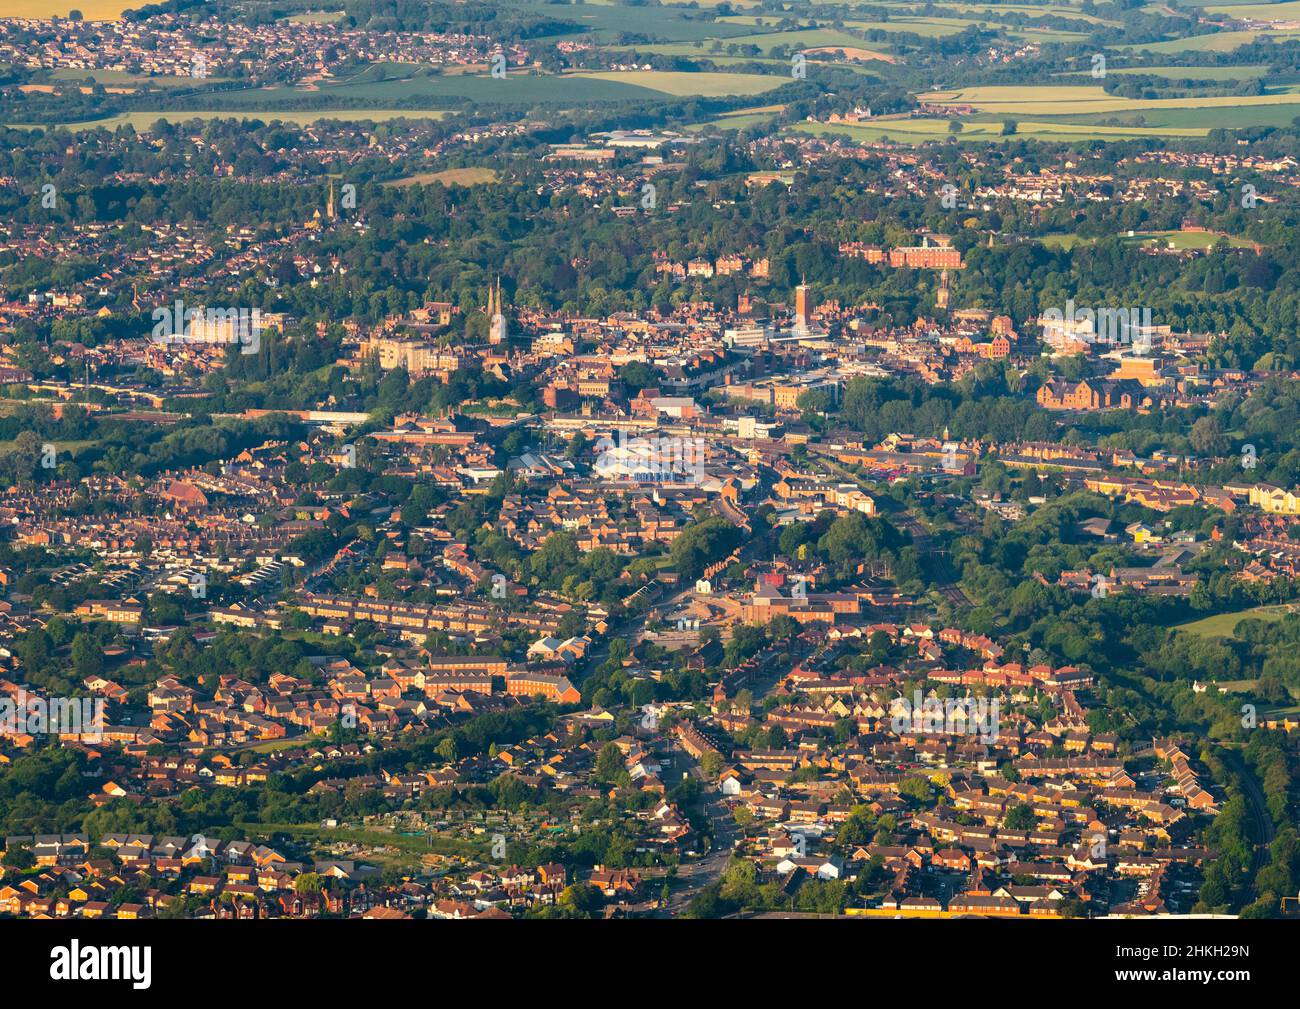 Aerial view of the town of Shrewsbury, Shropshire. Stock Photo